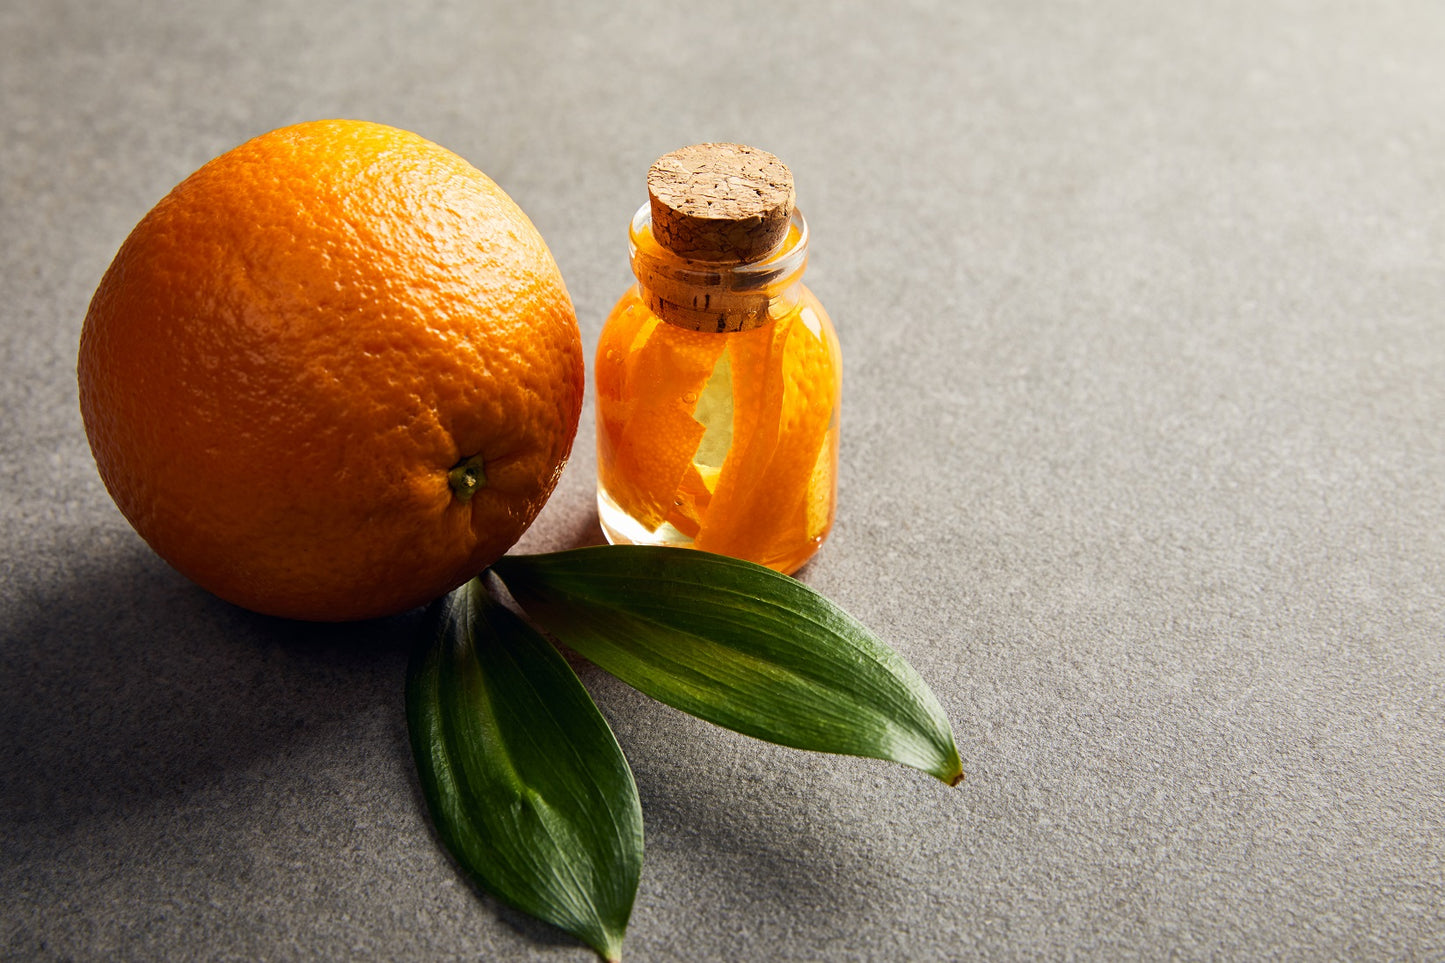 Orange Essential Oil - 100% Pure & - Therapeutic